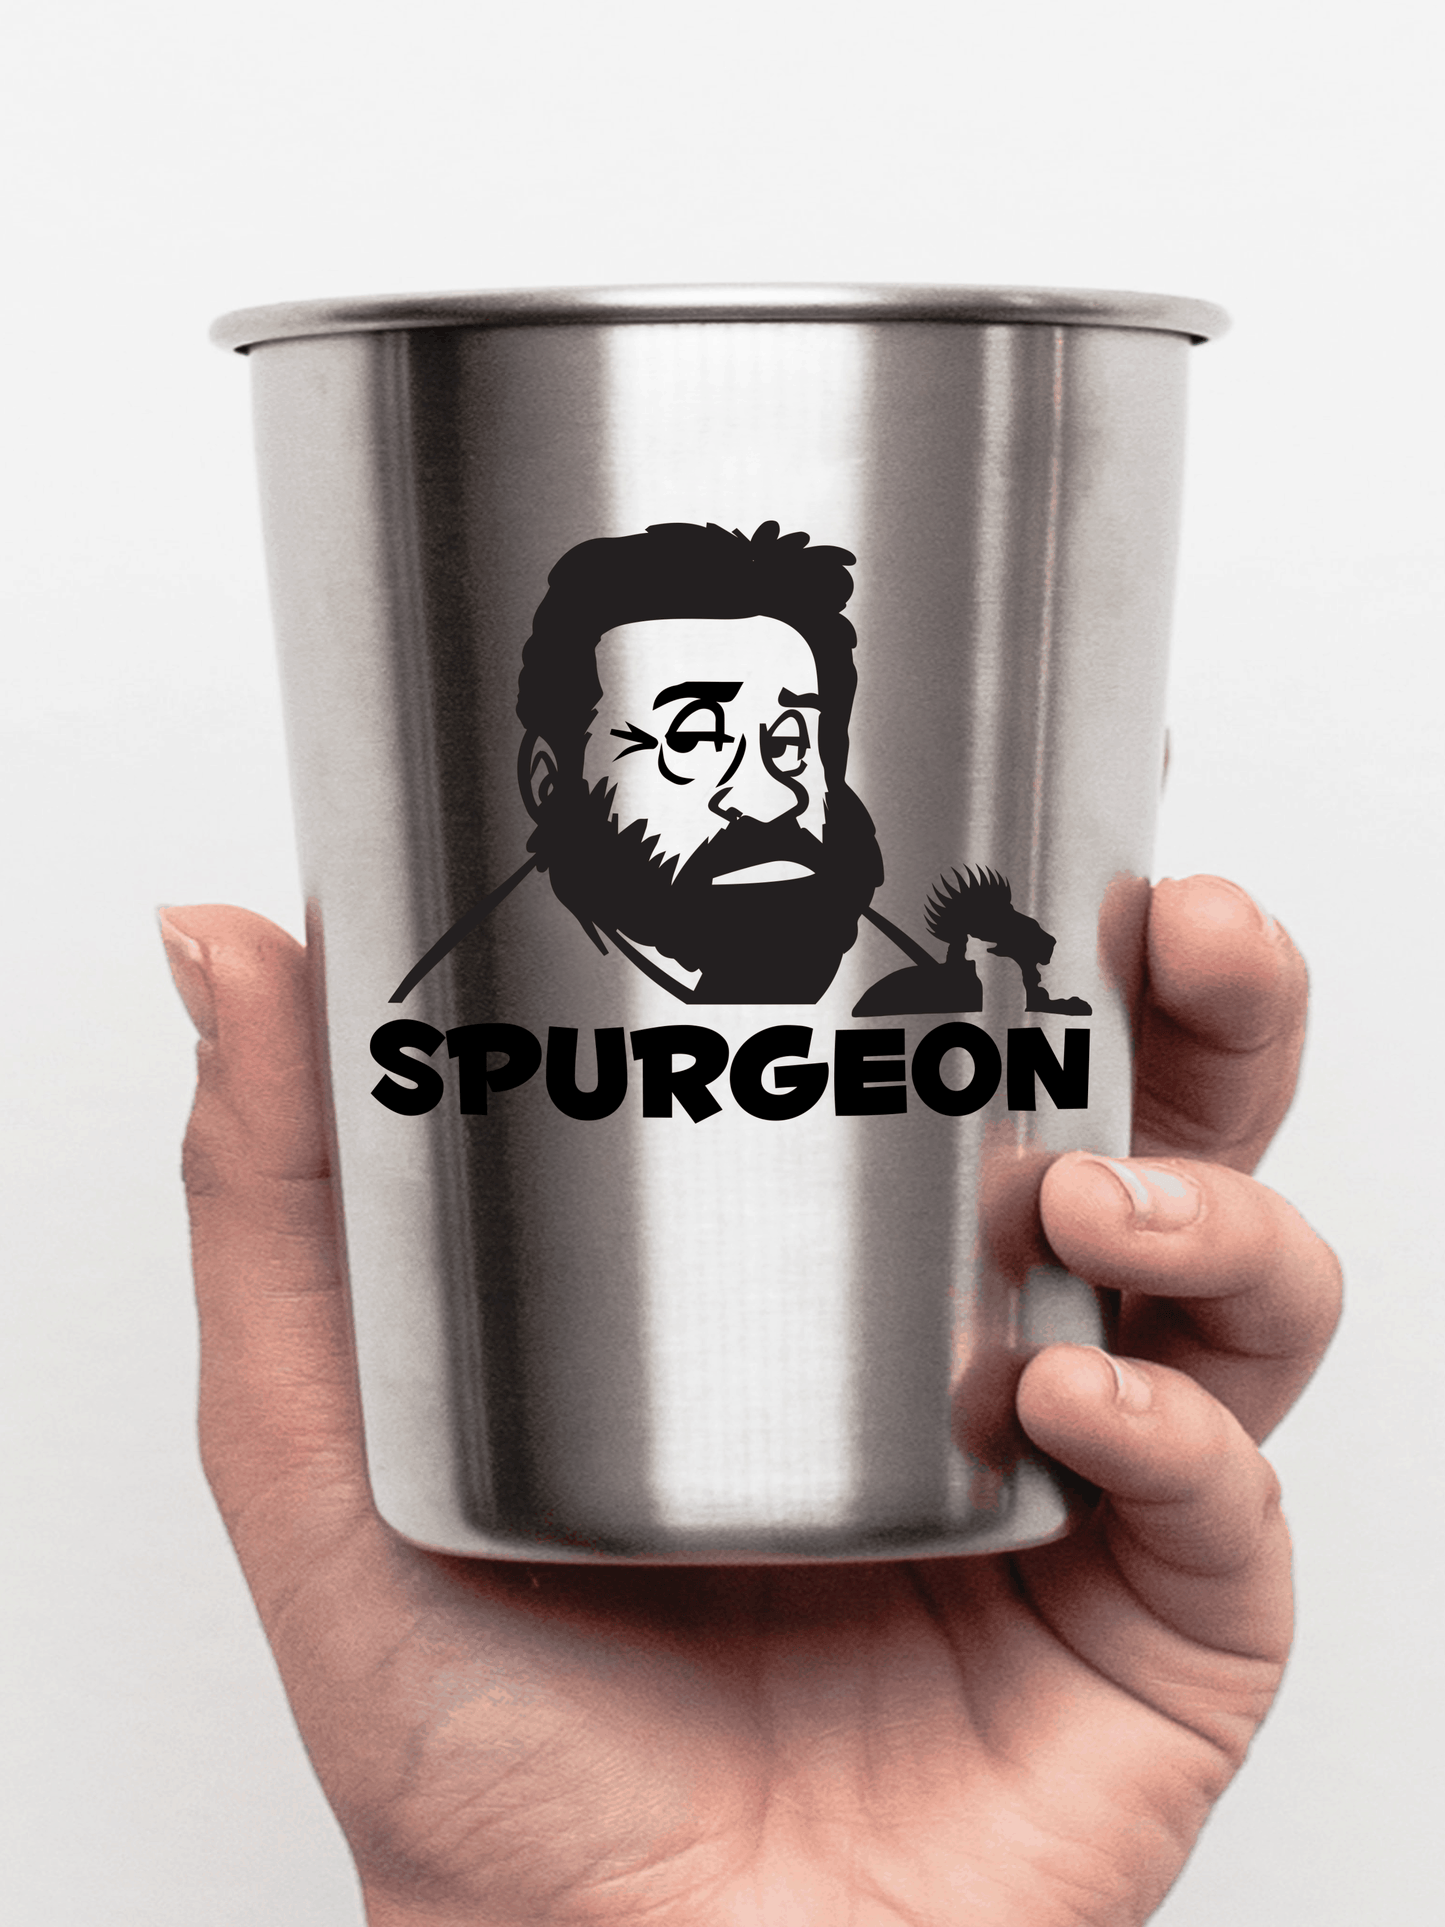 Charles Spurgeon - Decal